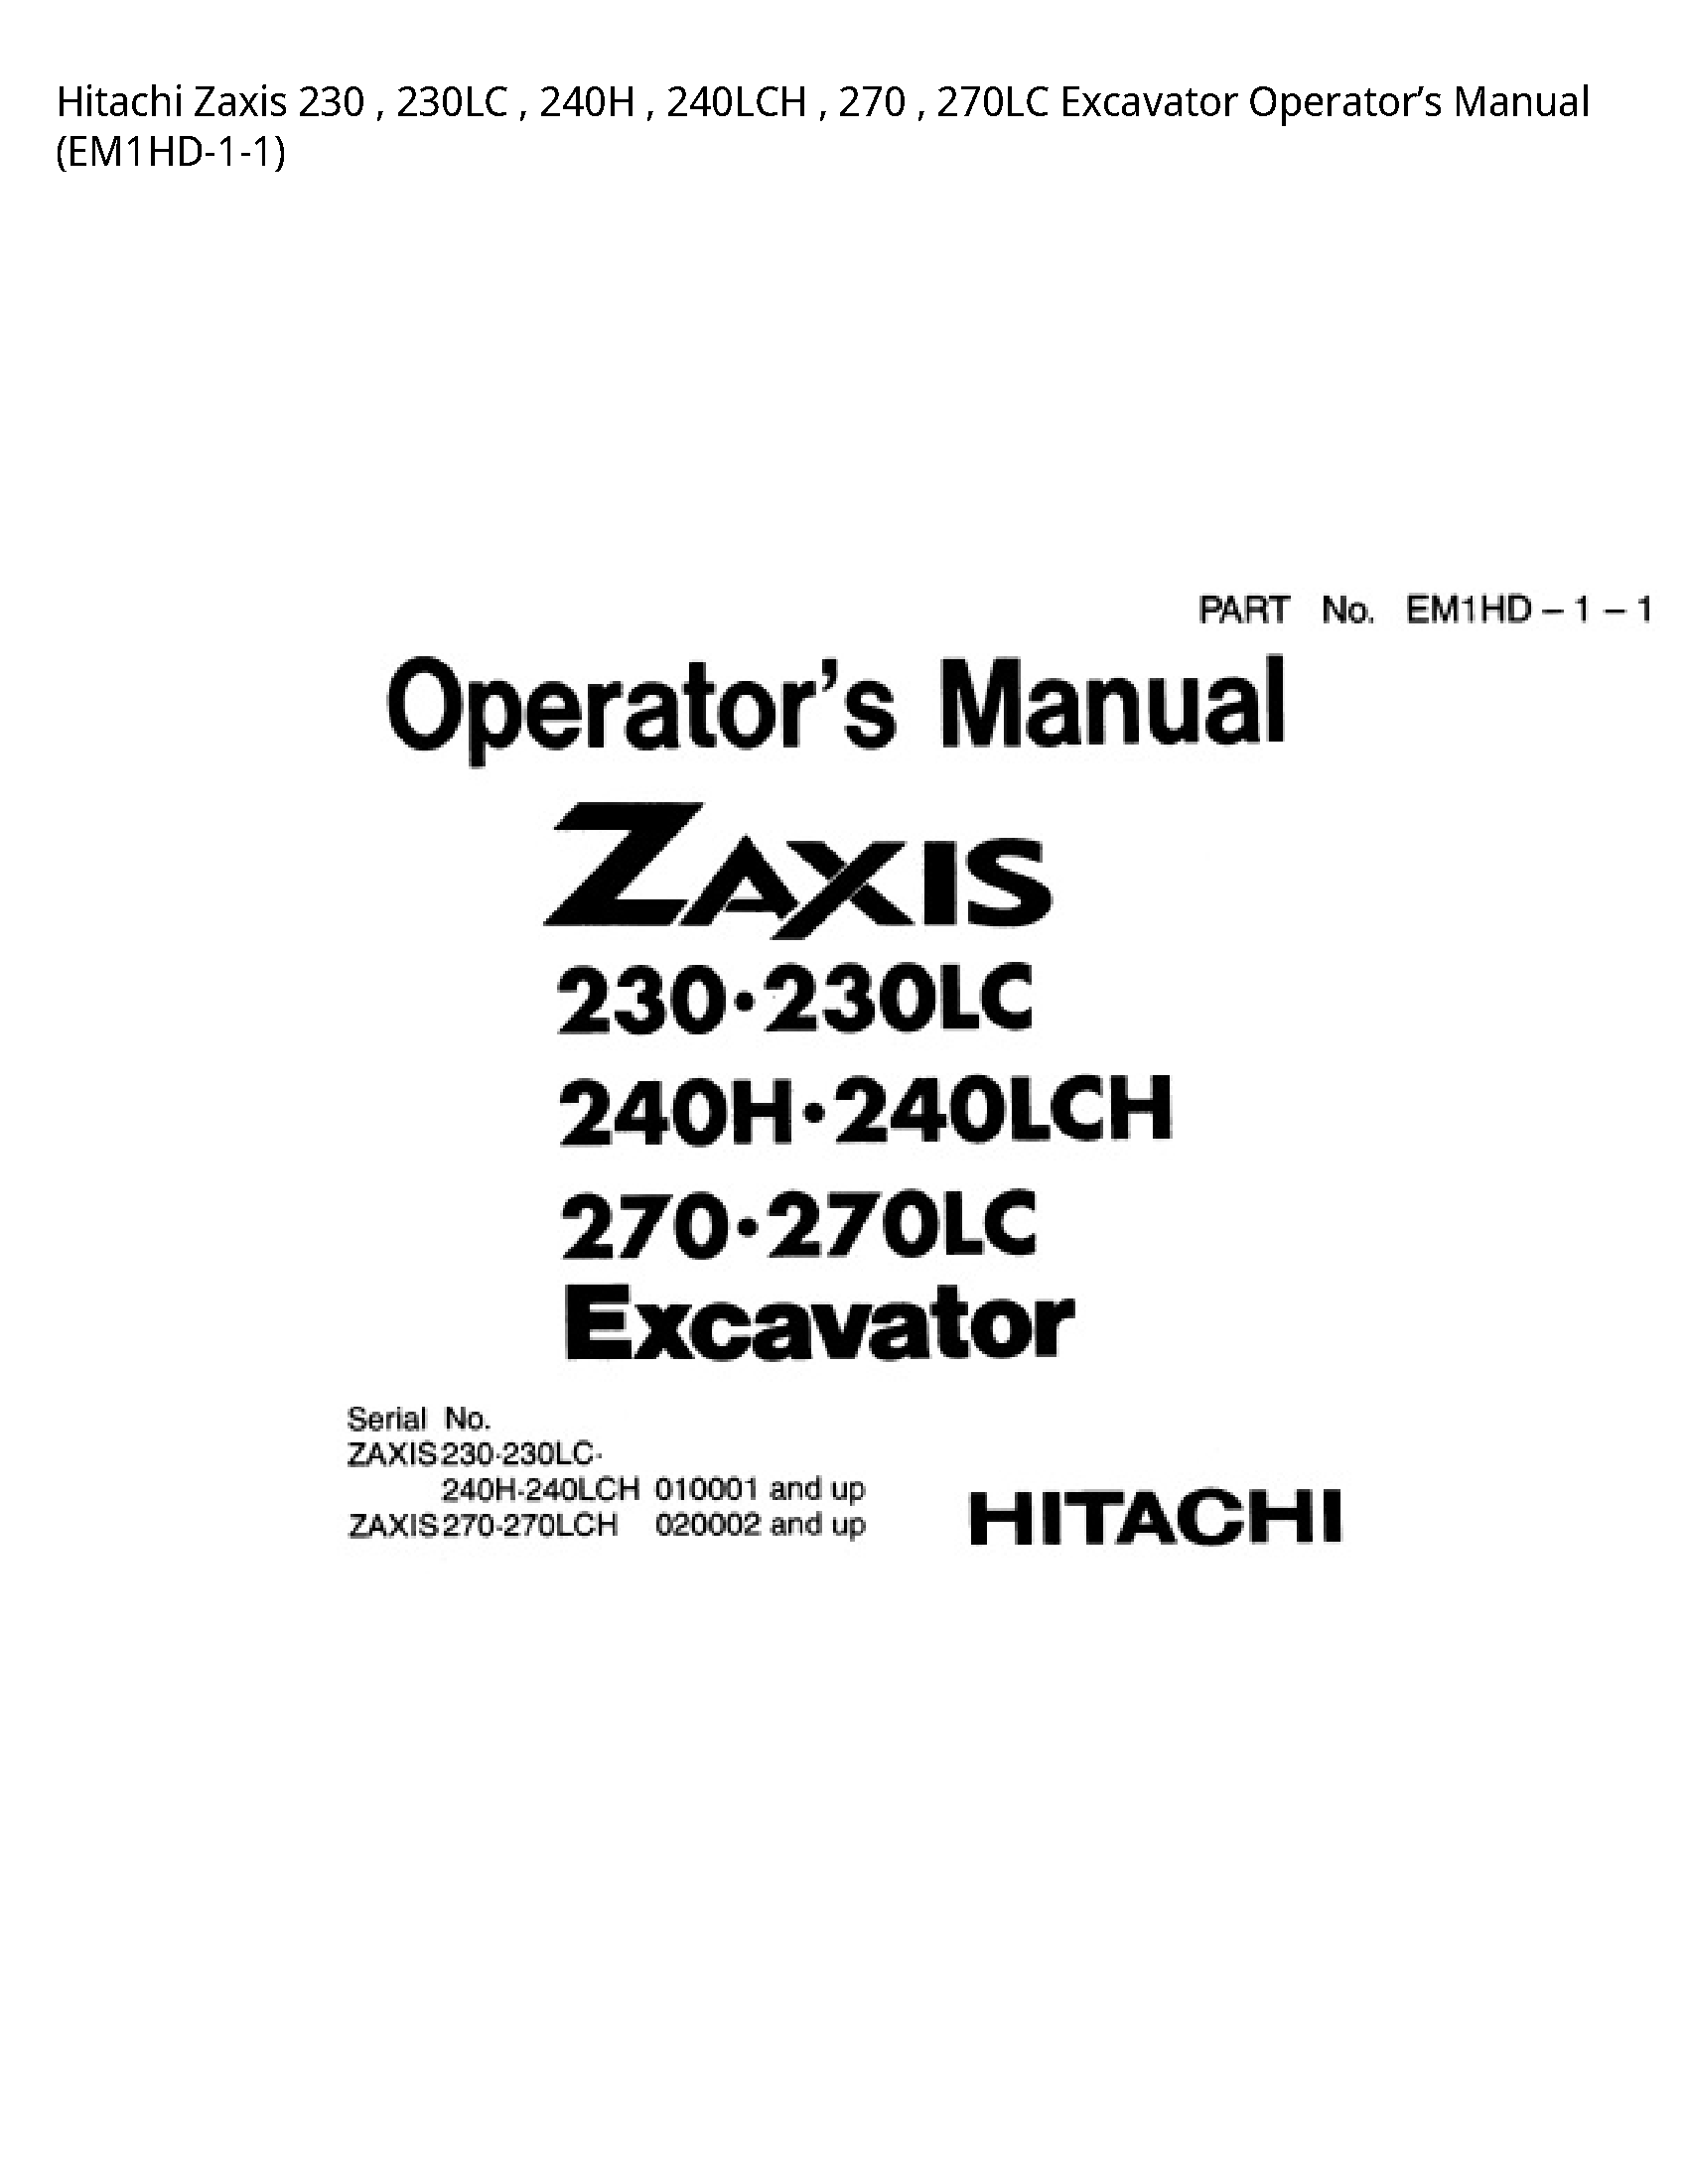 Hitachi 230 Zaxis Excavator Operator’s manual